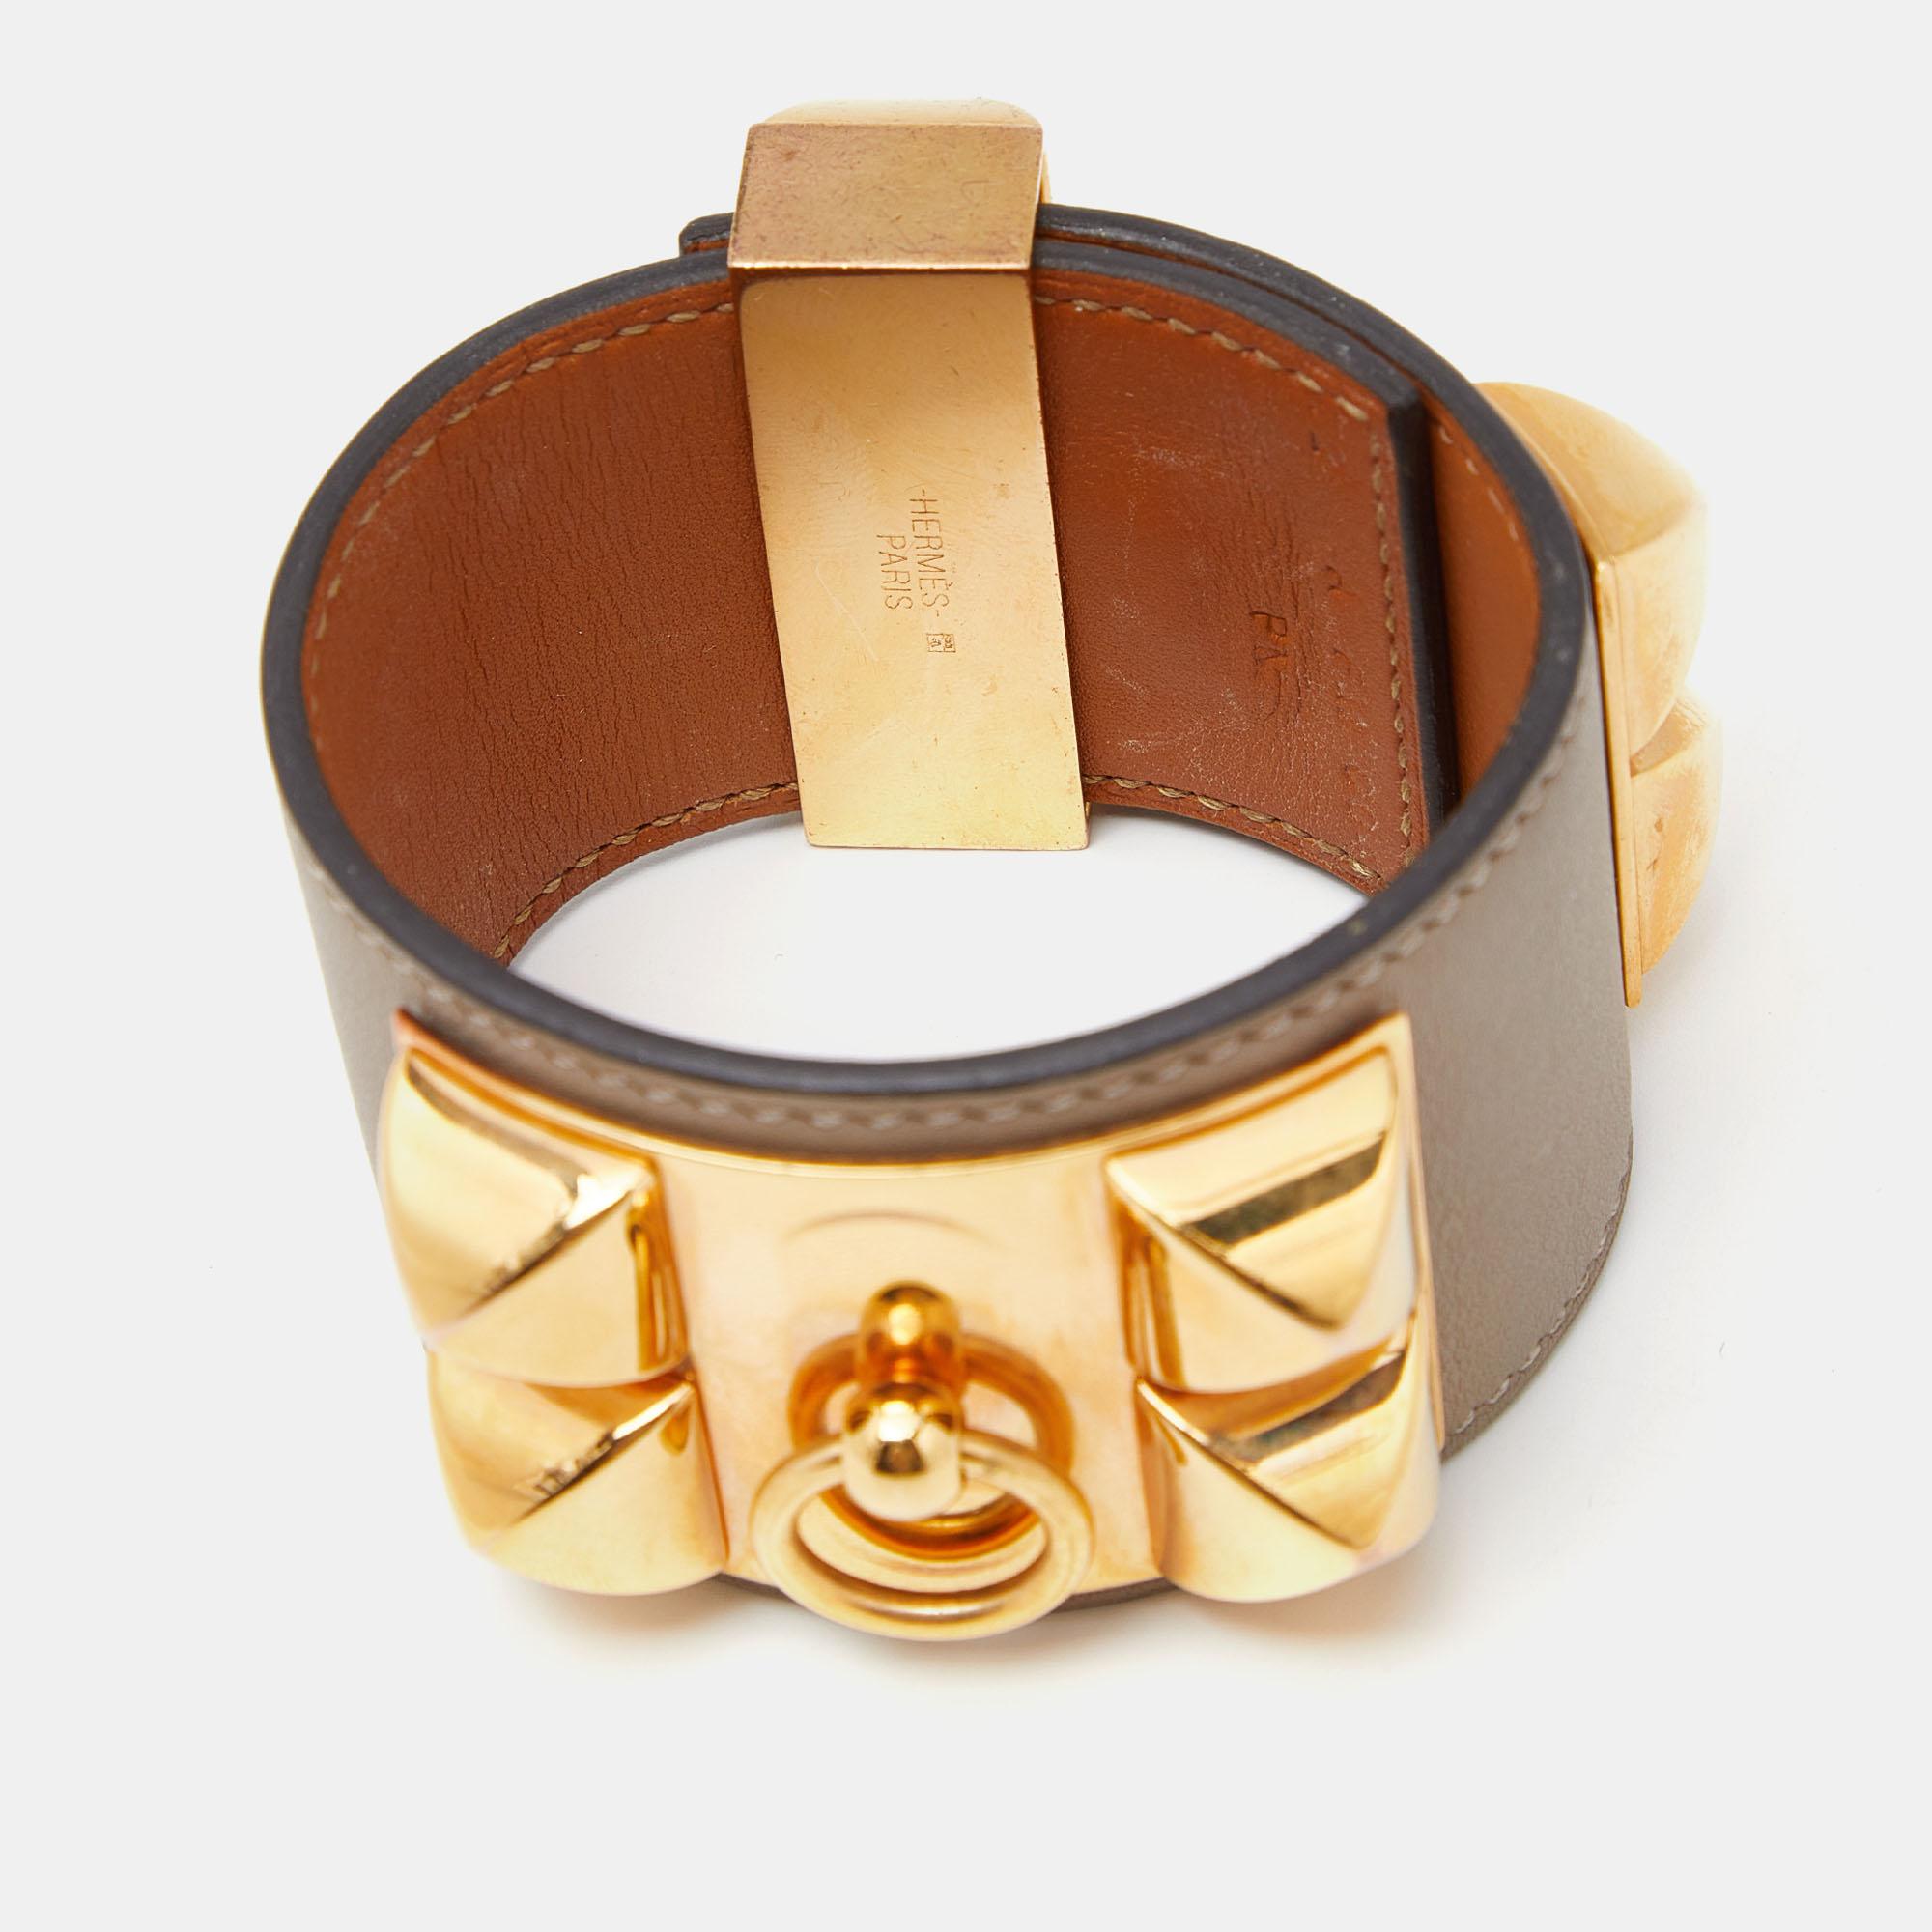 Aesthetic Movement Hermes Collier de Chien Leather Gold Plated Bracelet For Sale